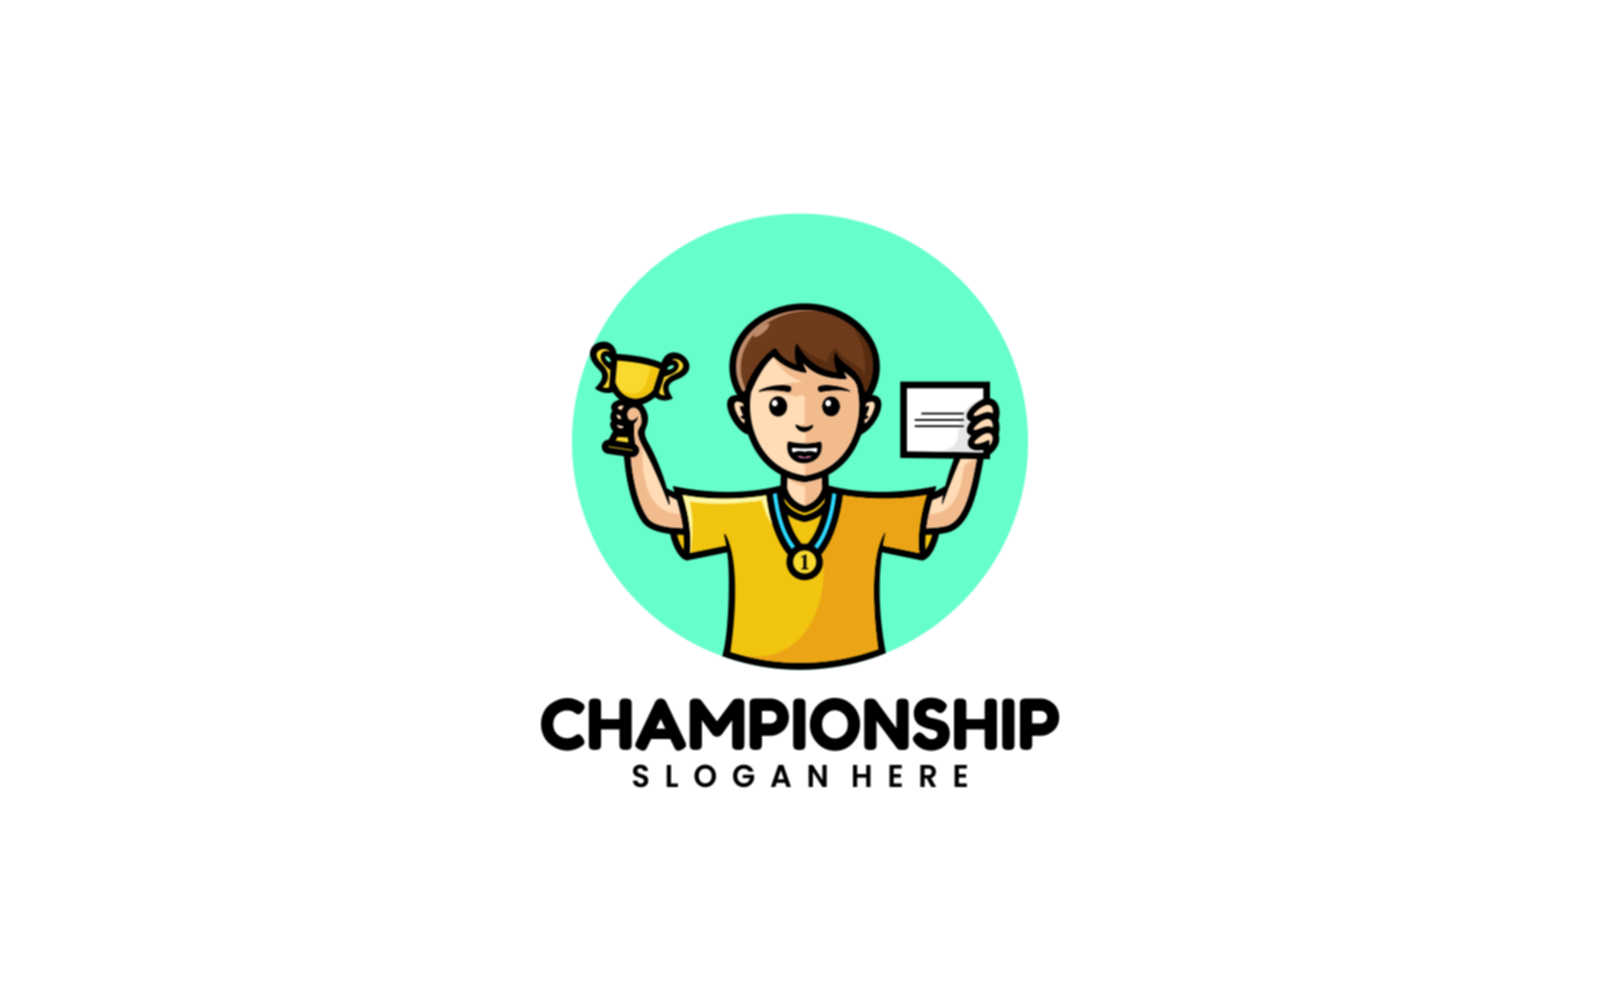 Championship Cartoon Logo